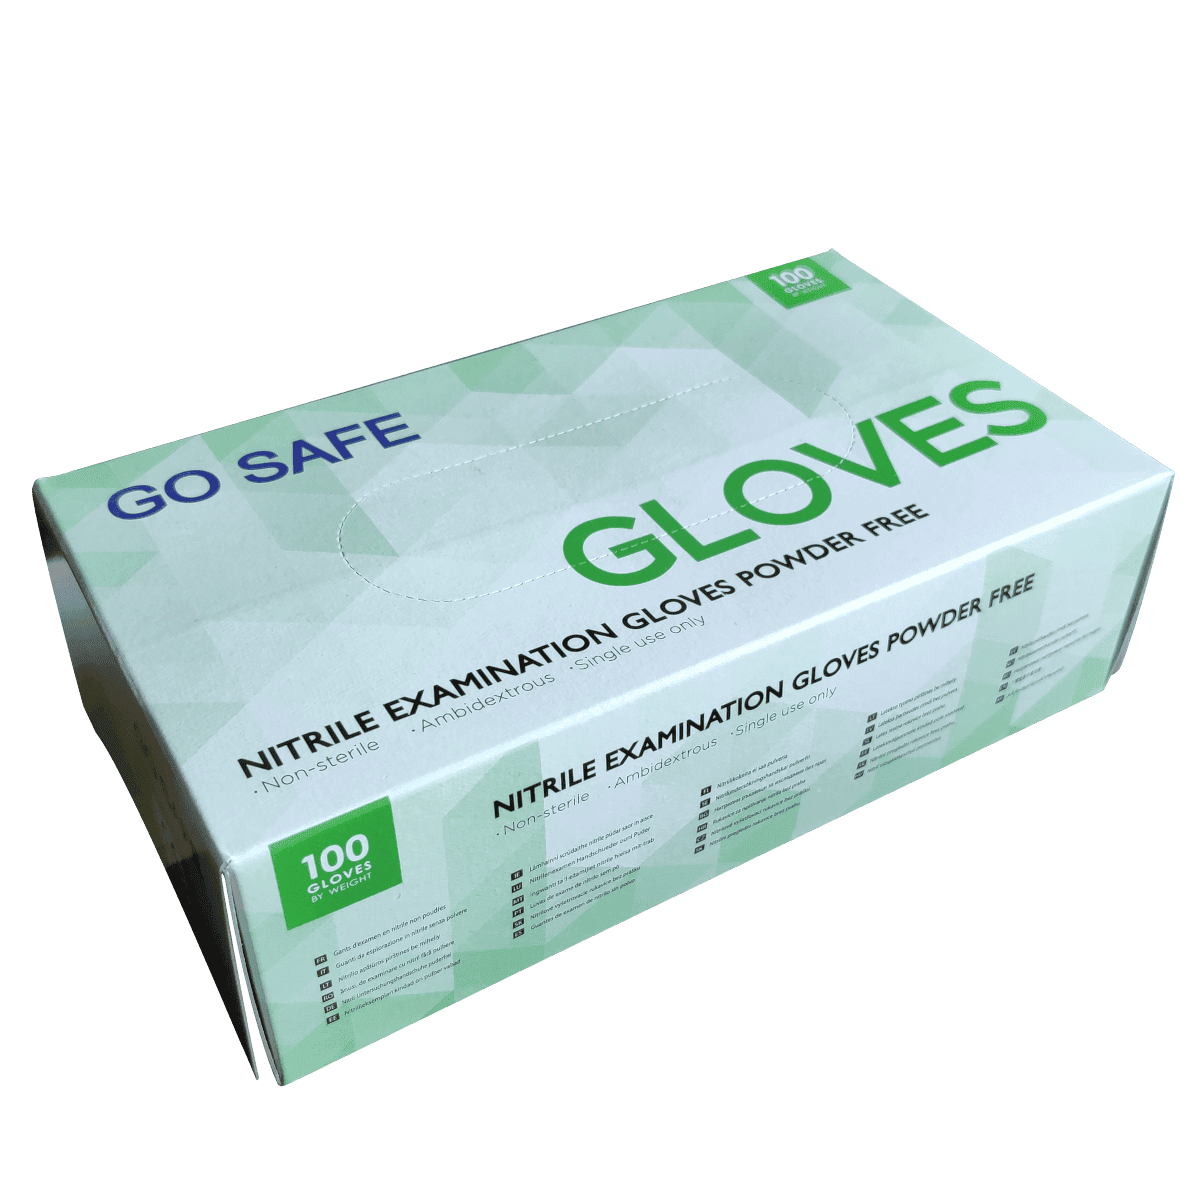 Disposable Latex Examination Gloves